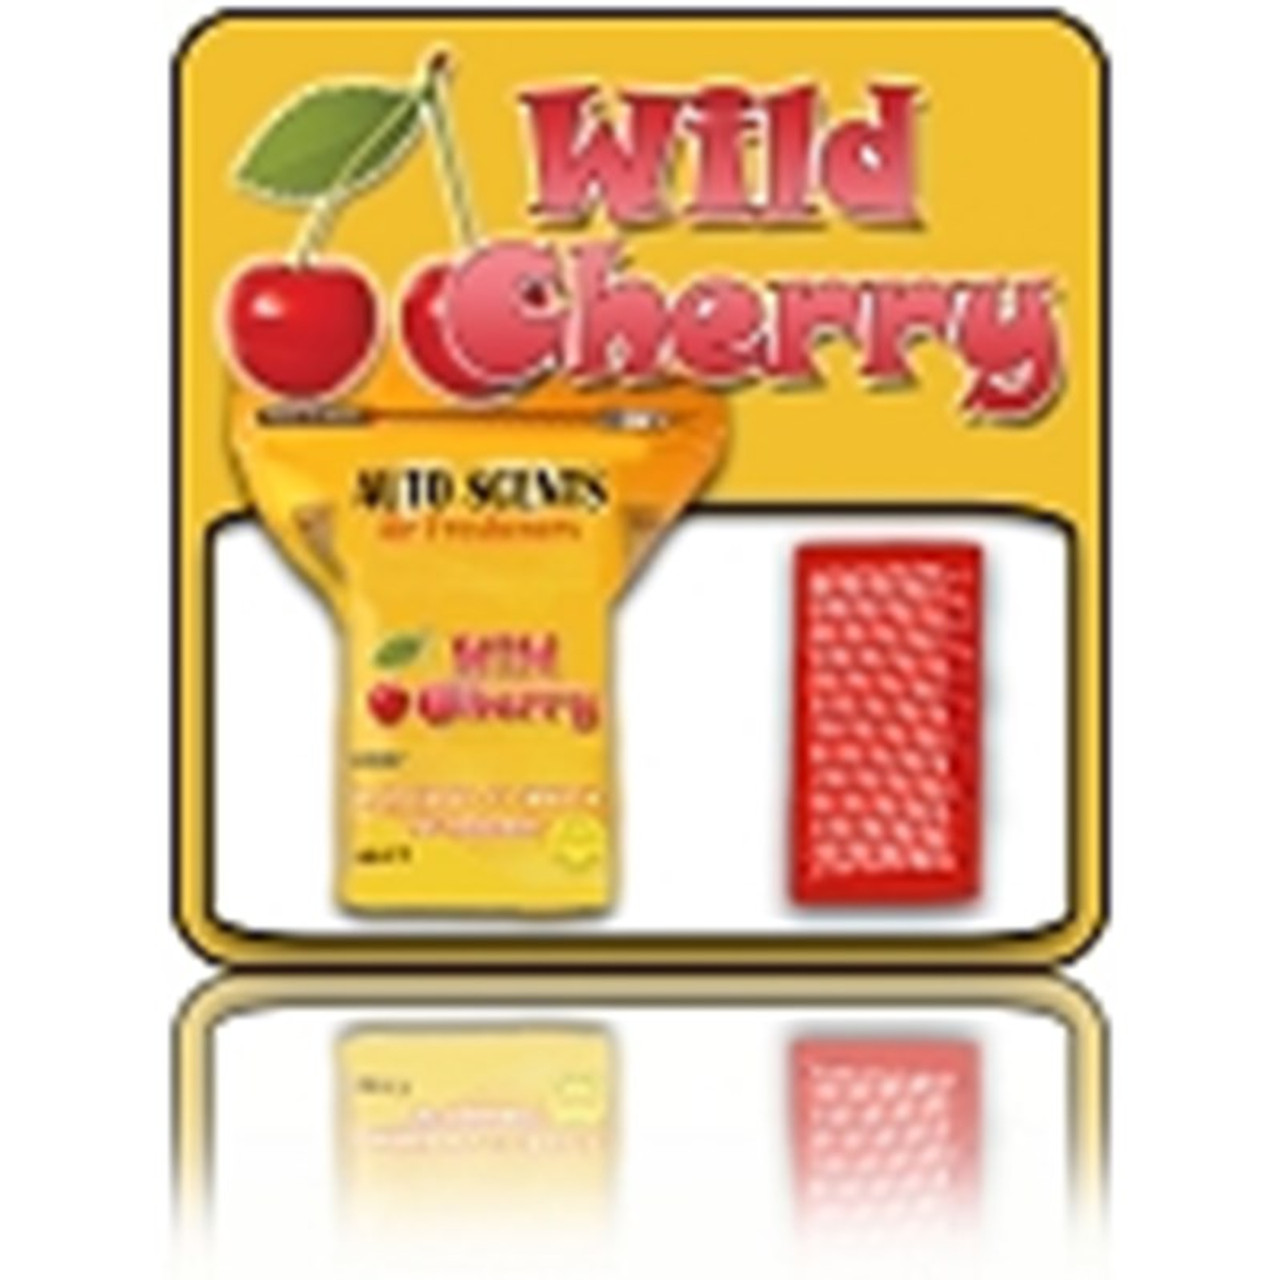 Wild Cherry Air Freshener 60-Count